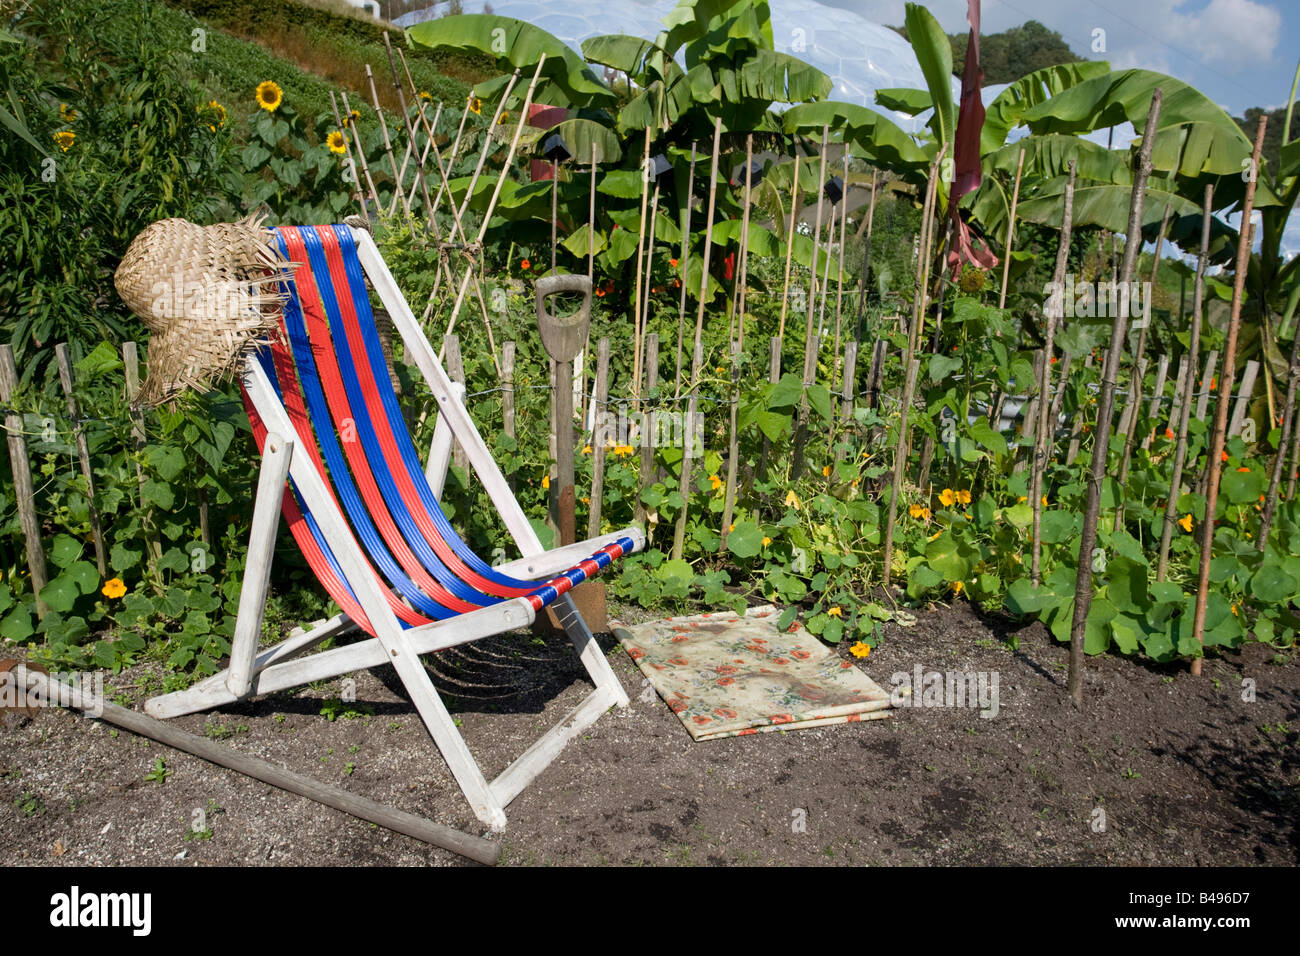 Empty striped deckchair in vegetable garden Eden Project Bodelva St Austell Cornwall UK Stock Photo